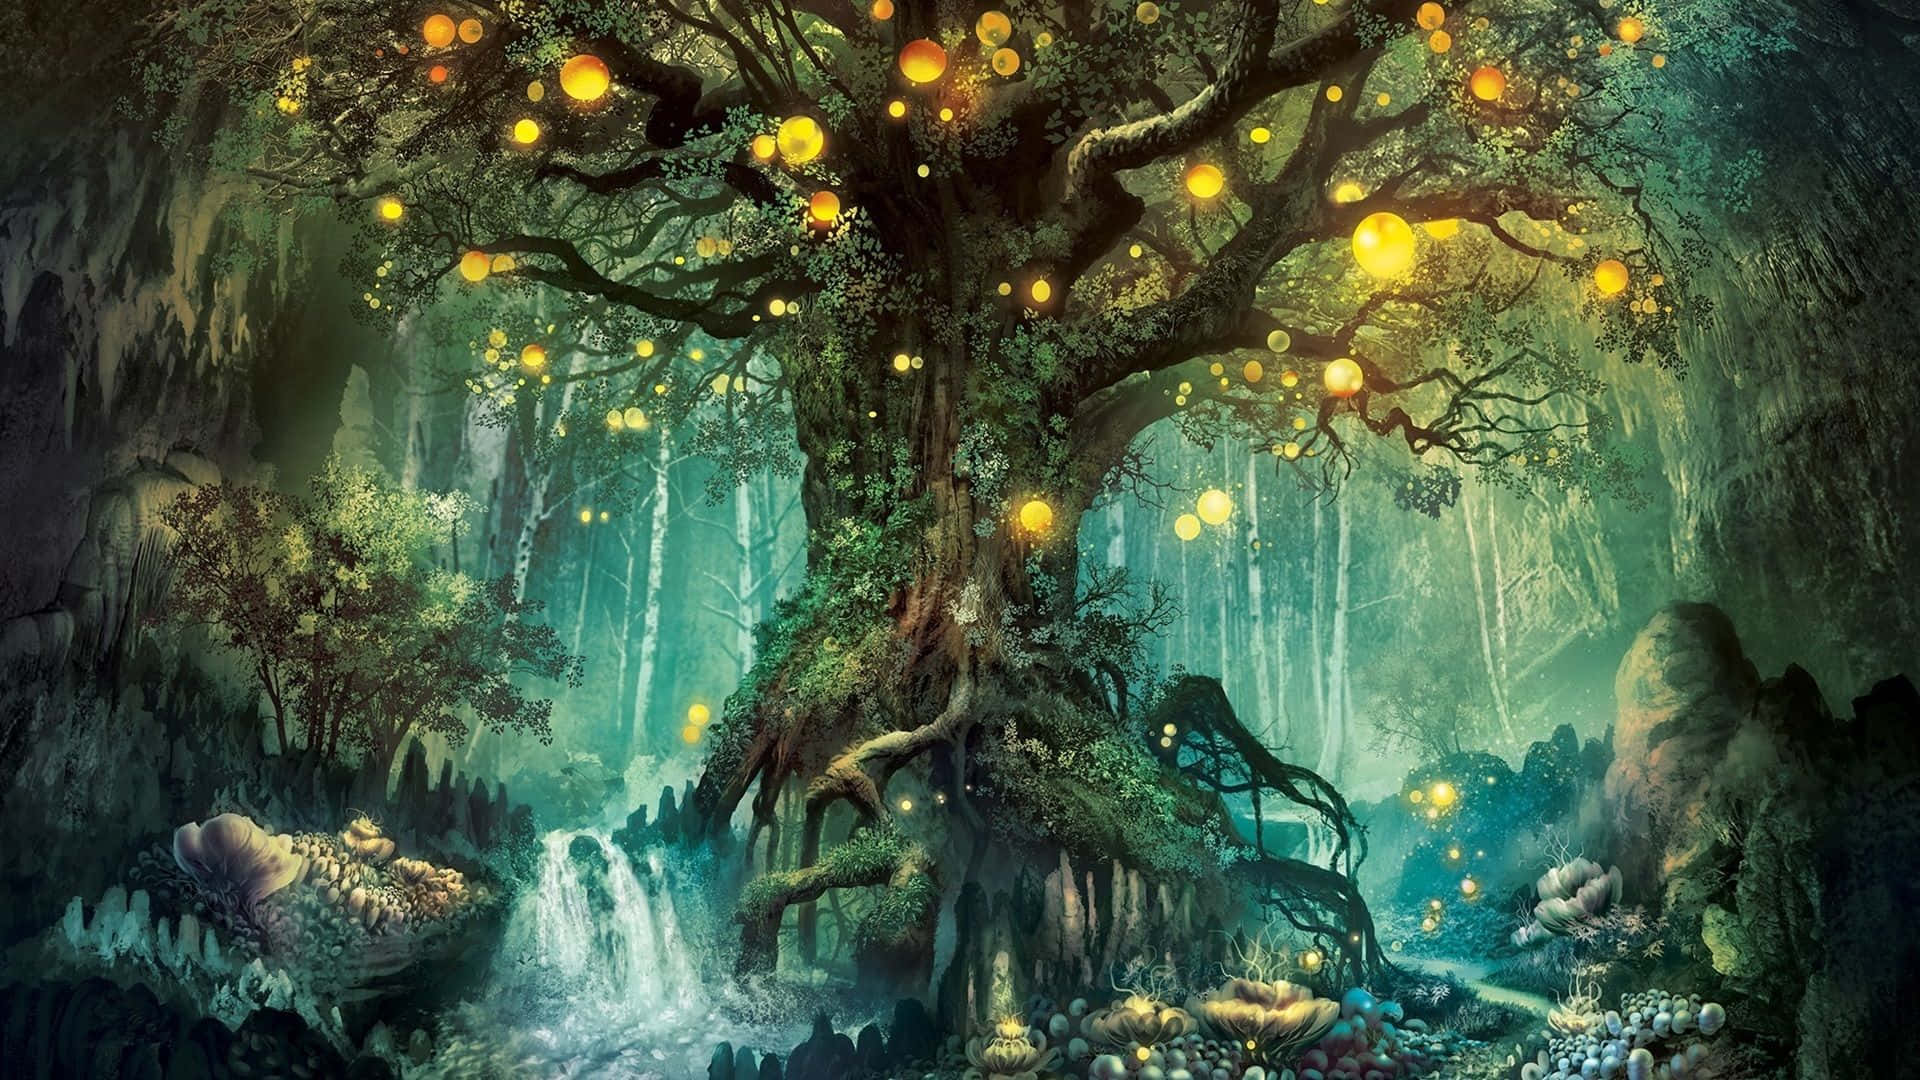 En magisk scene i Færge Skoven. Wallpaper